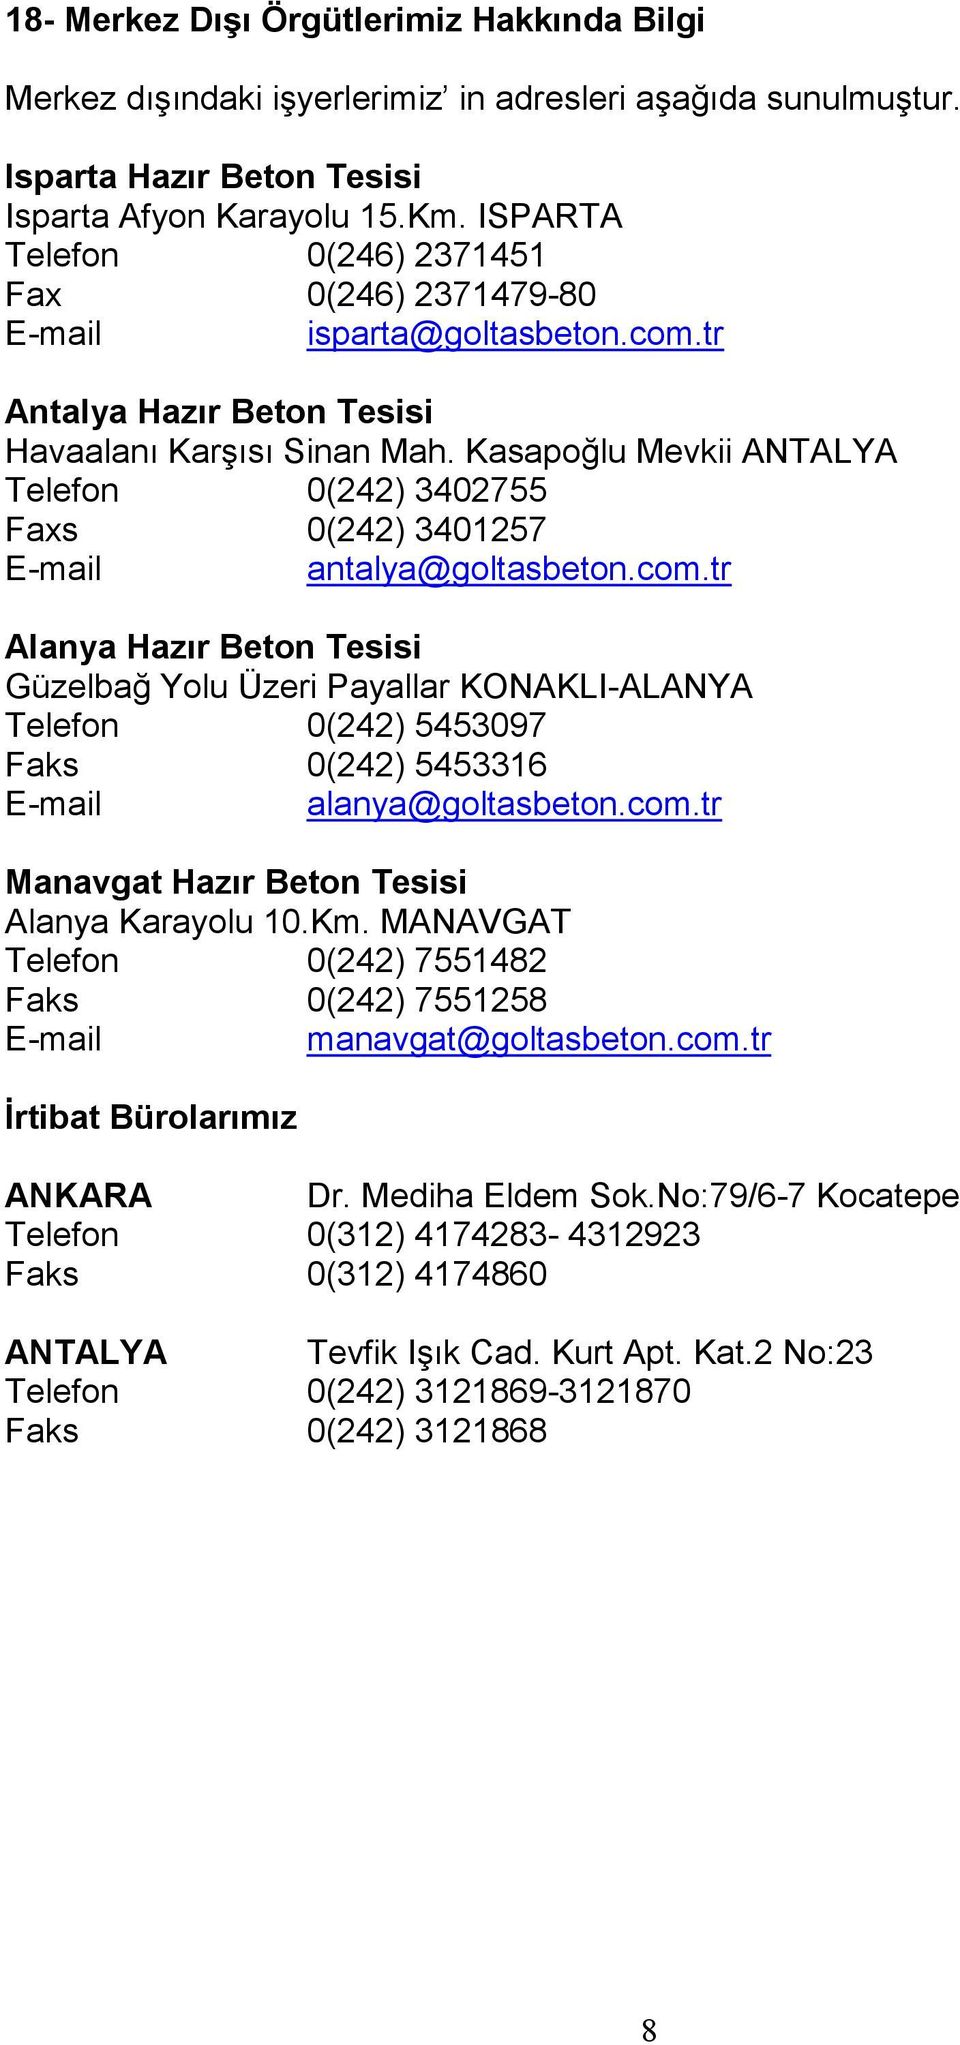 Kasapoğlu Mevkii ANTALYA Telefon 0(242) 3402755 Faxs 0(242) 3401257 E-mail antalya@goltasbeton.com.